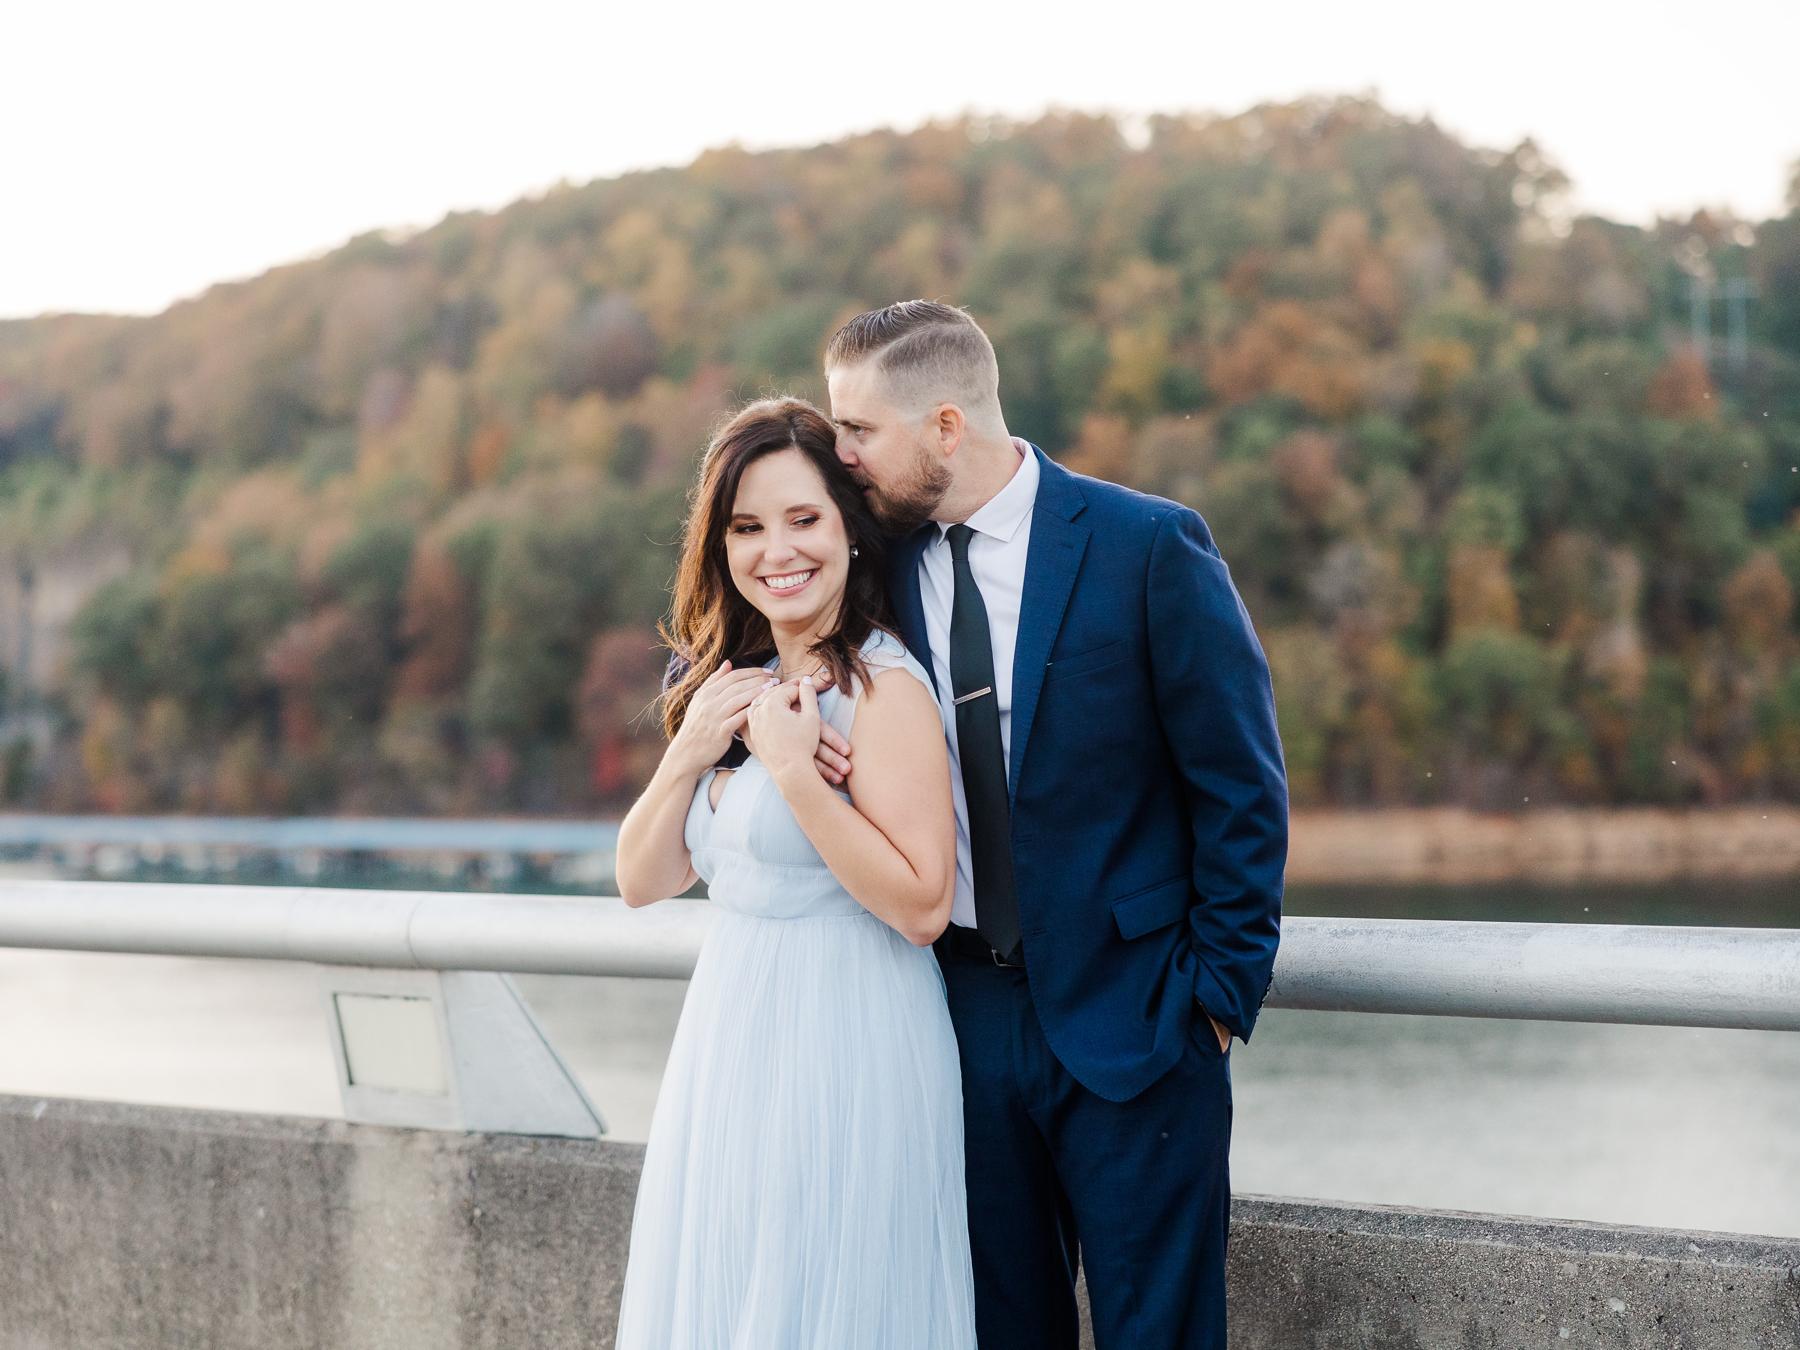 The Wedding Website of Keely Elledge and Travis Ervin